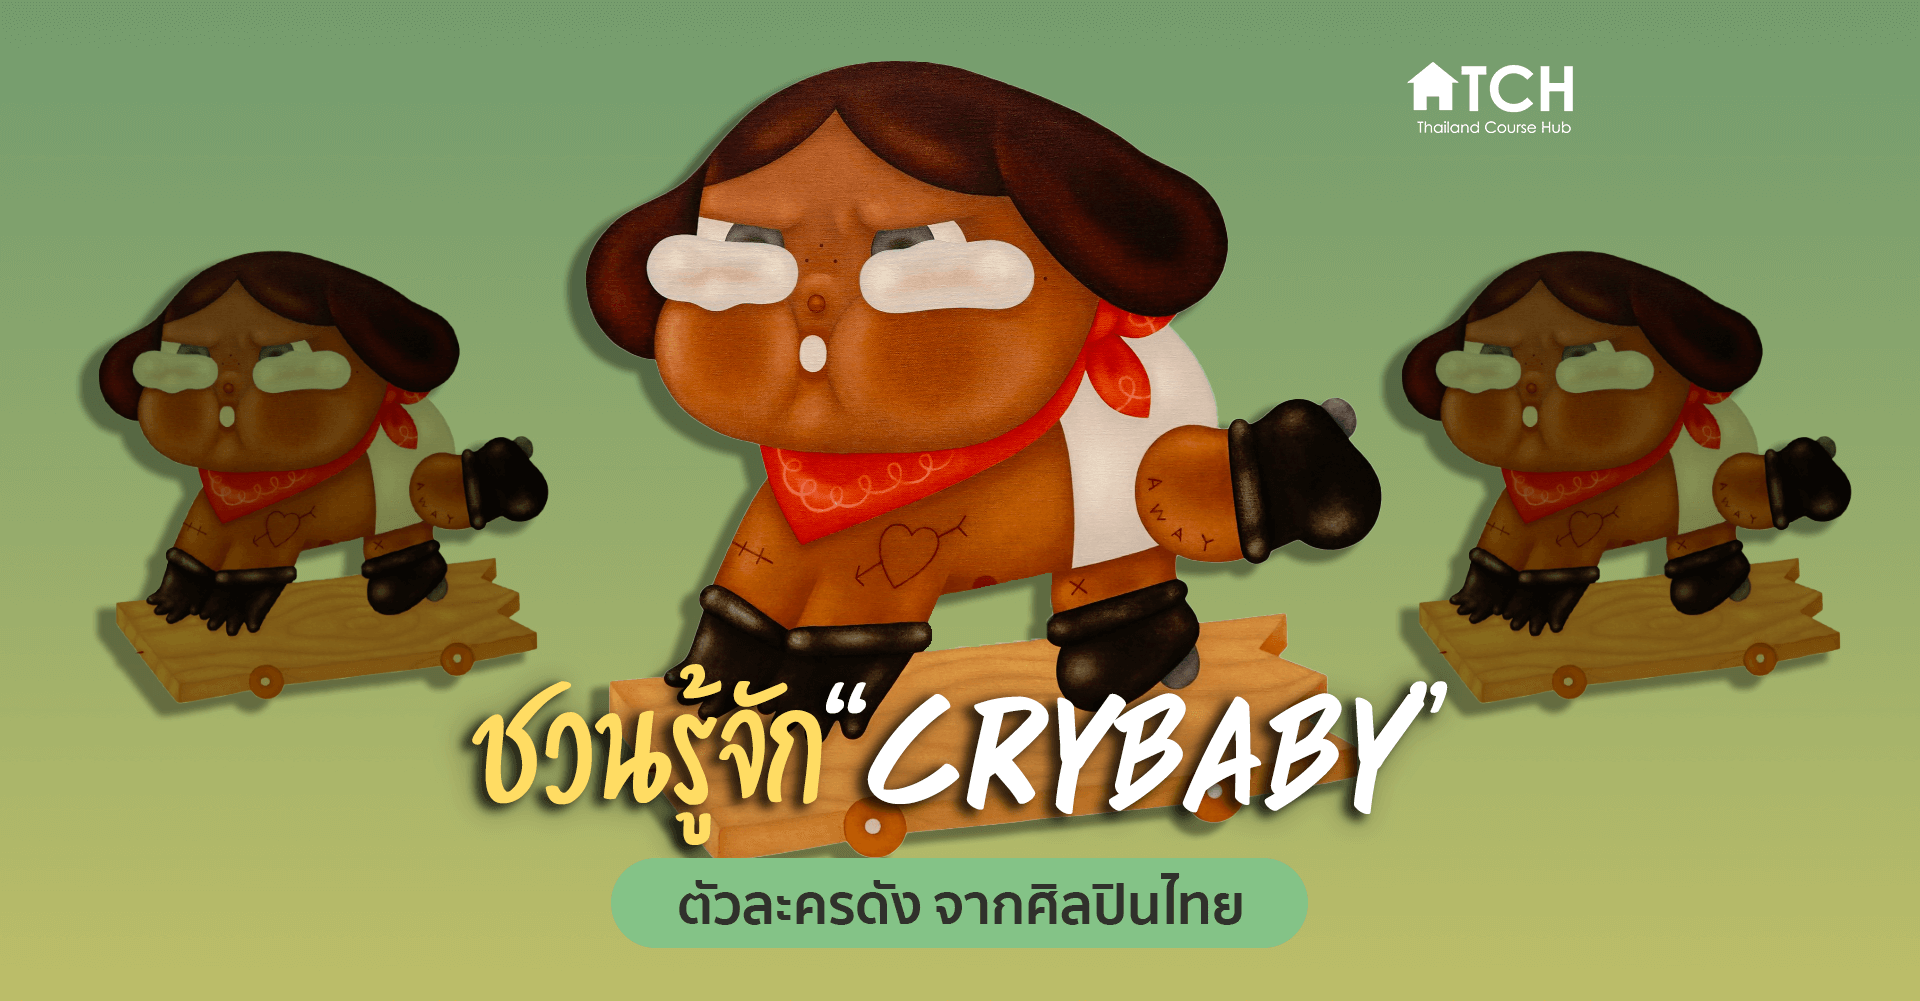 crybaby thai artist